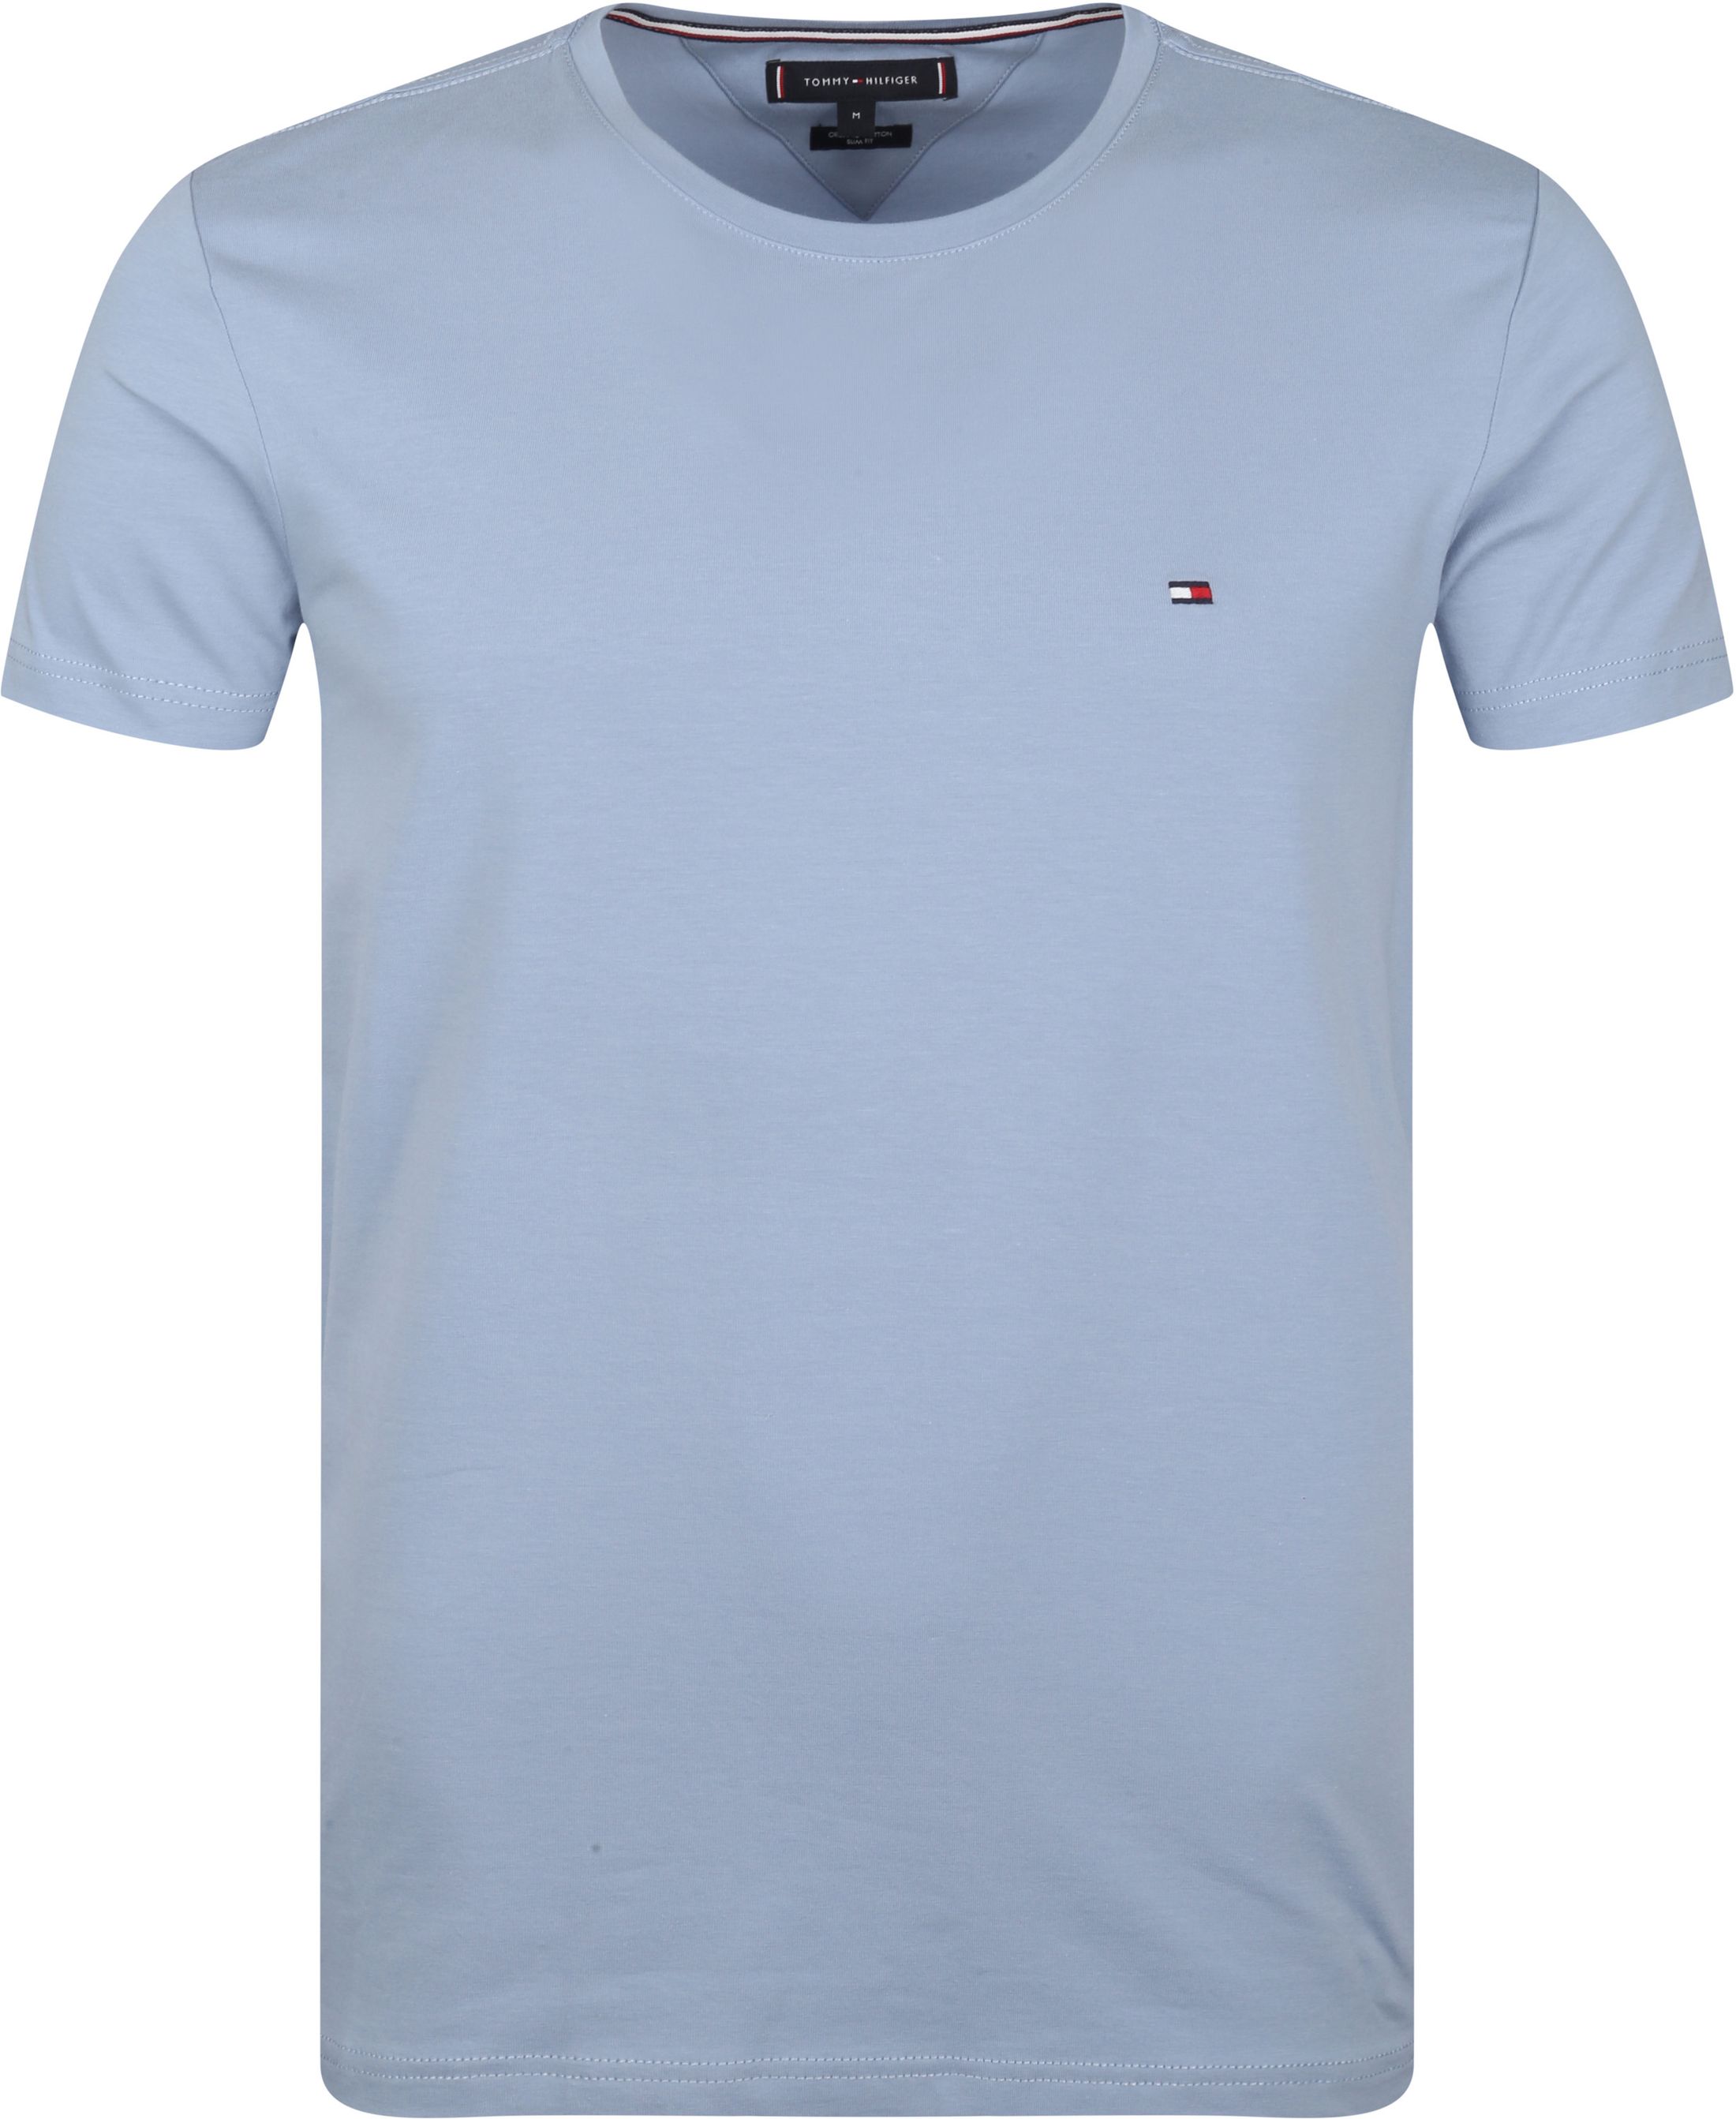 Tommy Hilfiger T-shirt Stretch Blue size L